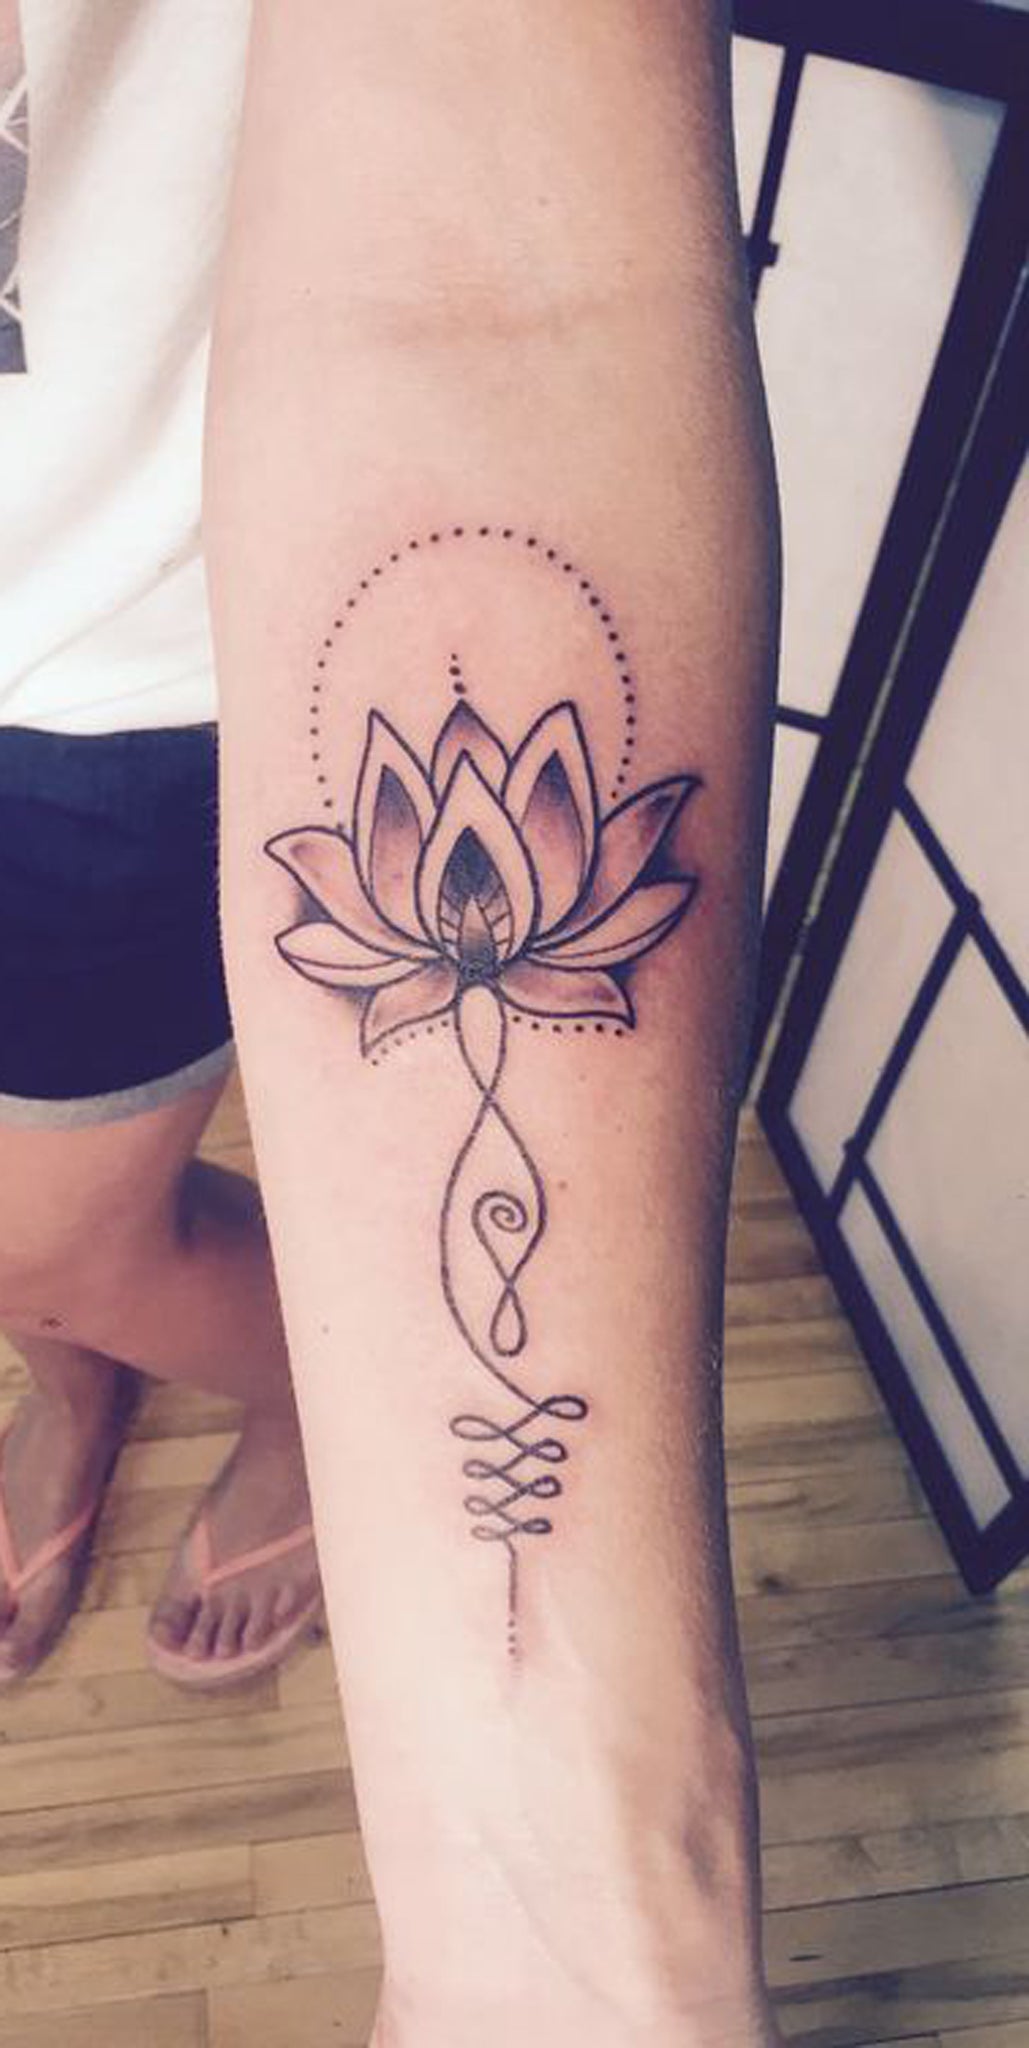 Lotus Inner Forearm Tattoo Ideas for Women - Geometric Mandala Arm Tat -  ideas geométricas del tatuaje del antebrazo del loto para las mujeres -  www.MyBodiArt.com